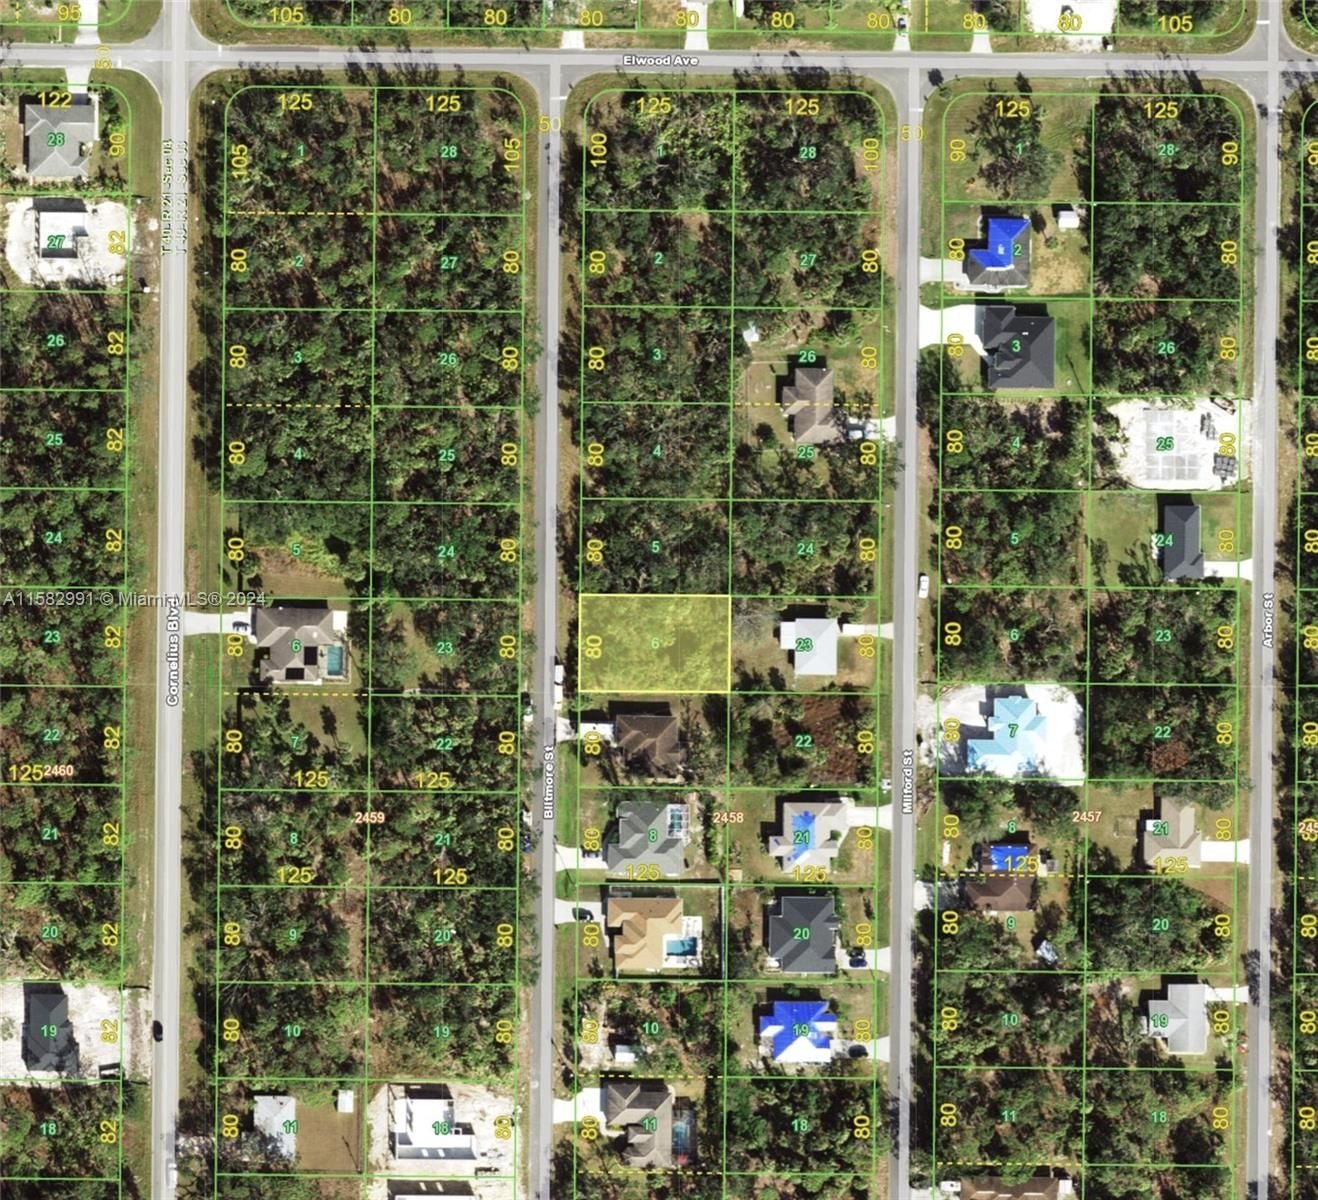 Real estate property located at 330 Biltmore St, Charlotte County, Port Charlotte, Port Charlotte, FL